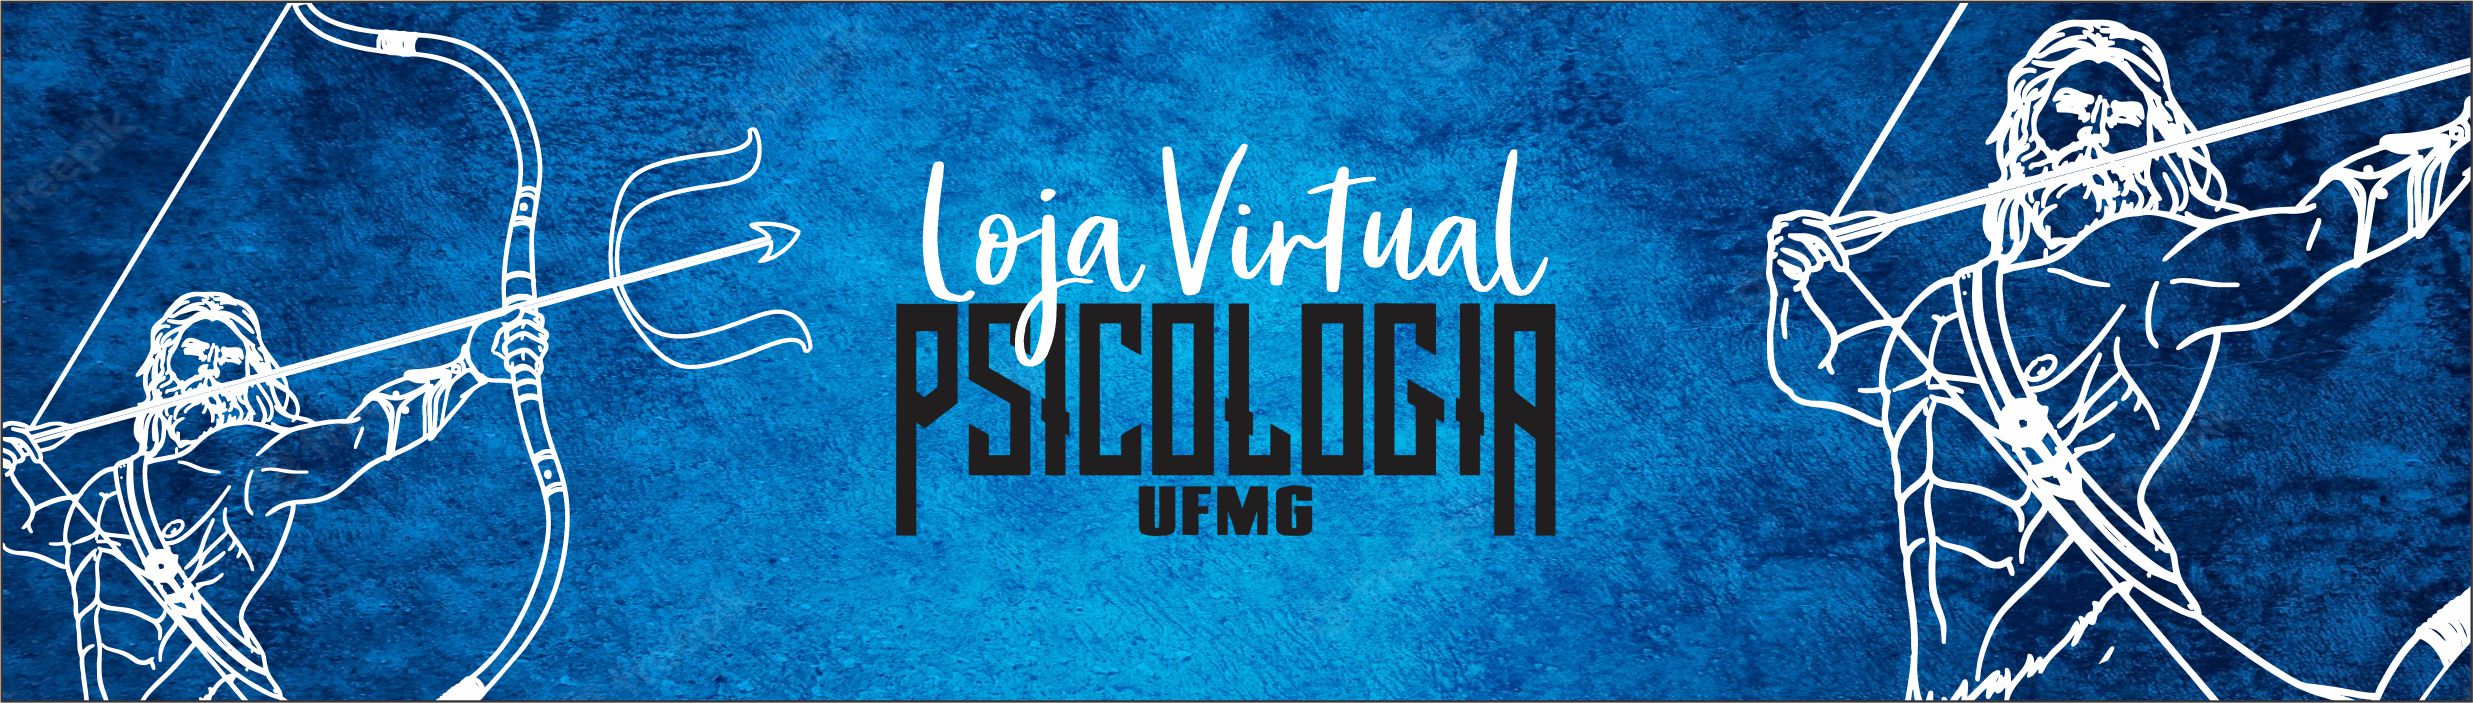 Psicologia UFMG